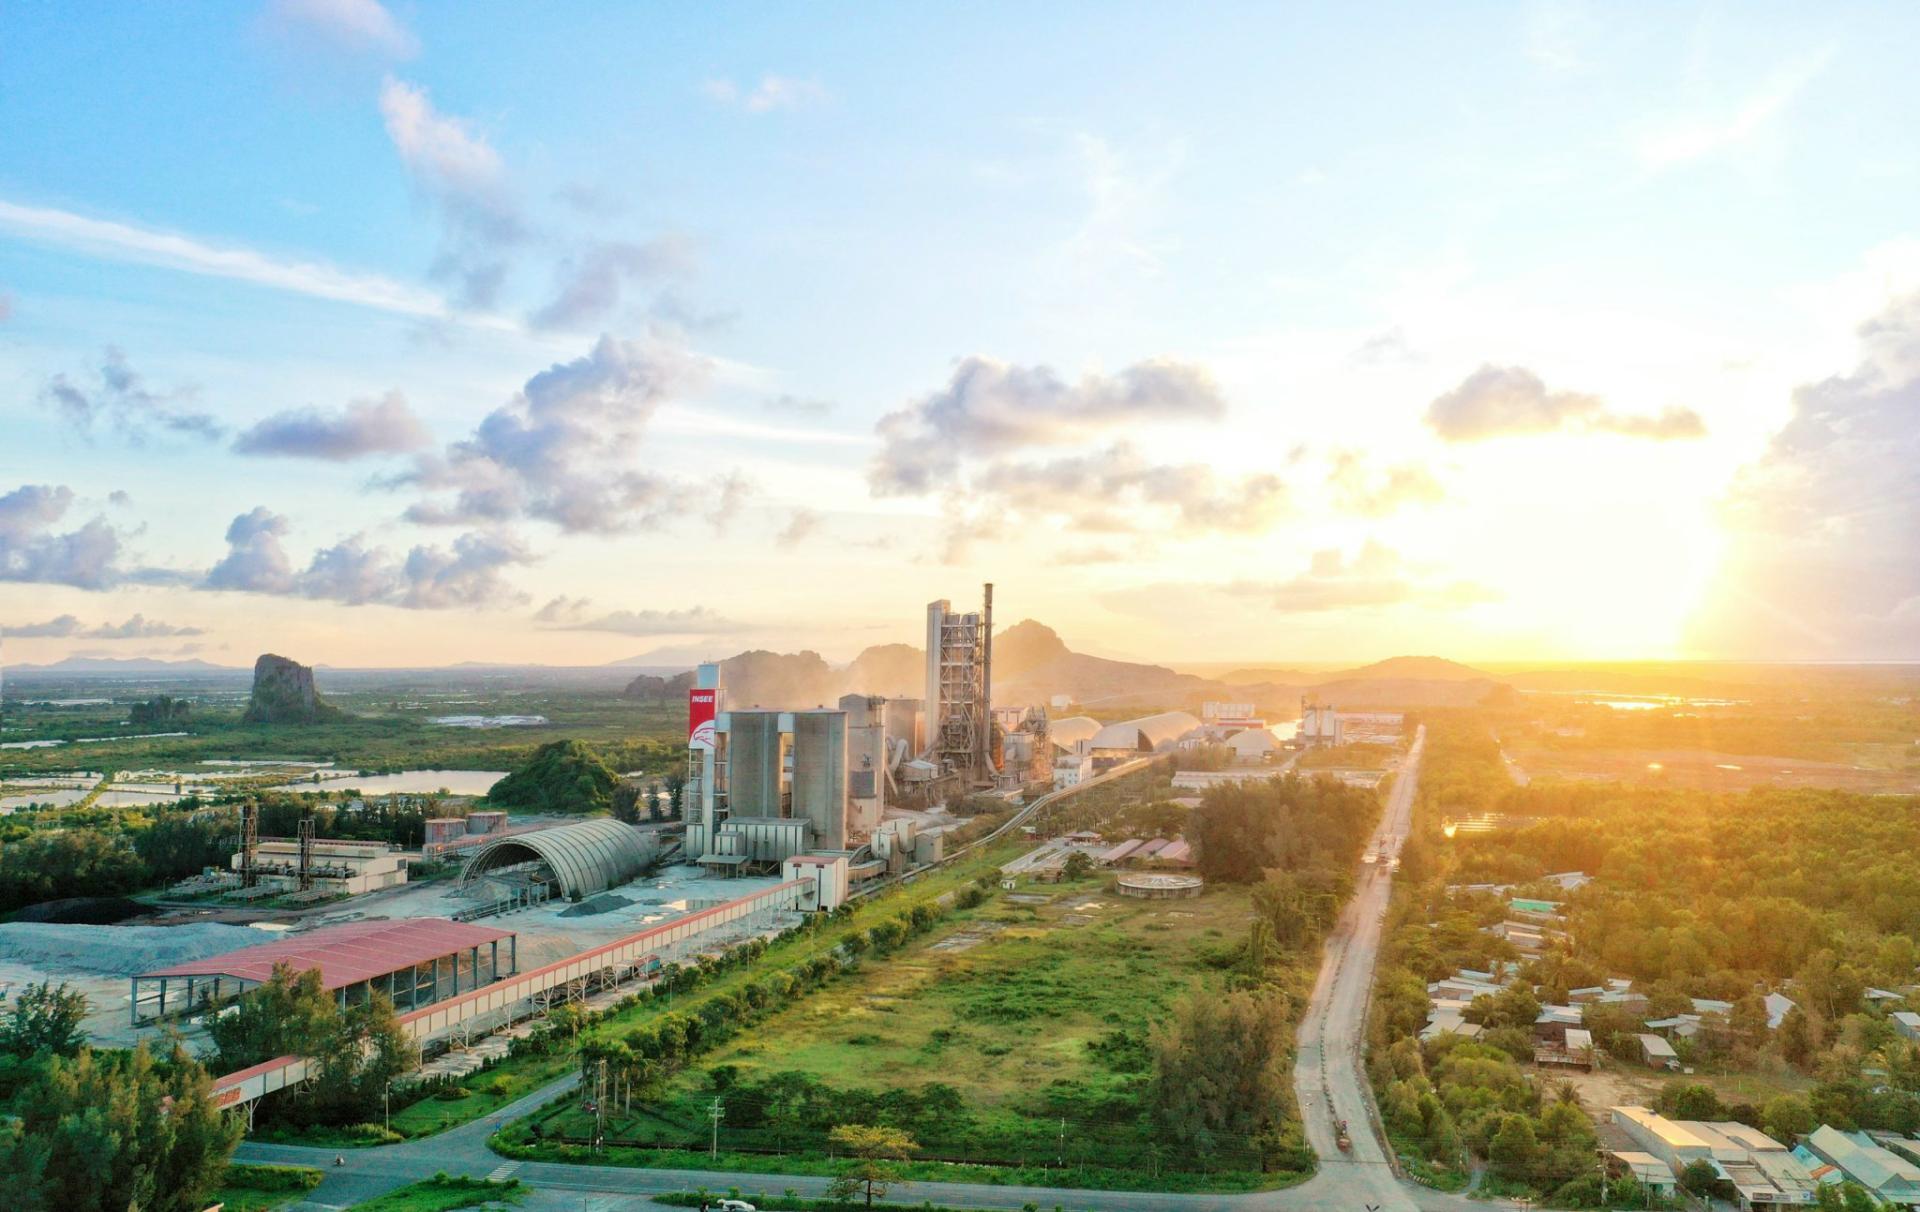 Hon Chong plant at Kien Luong district, Kien Giang province